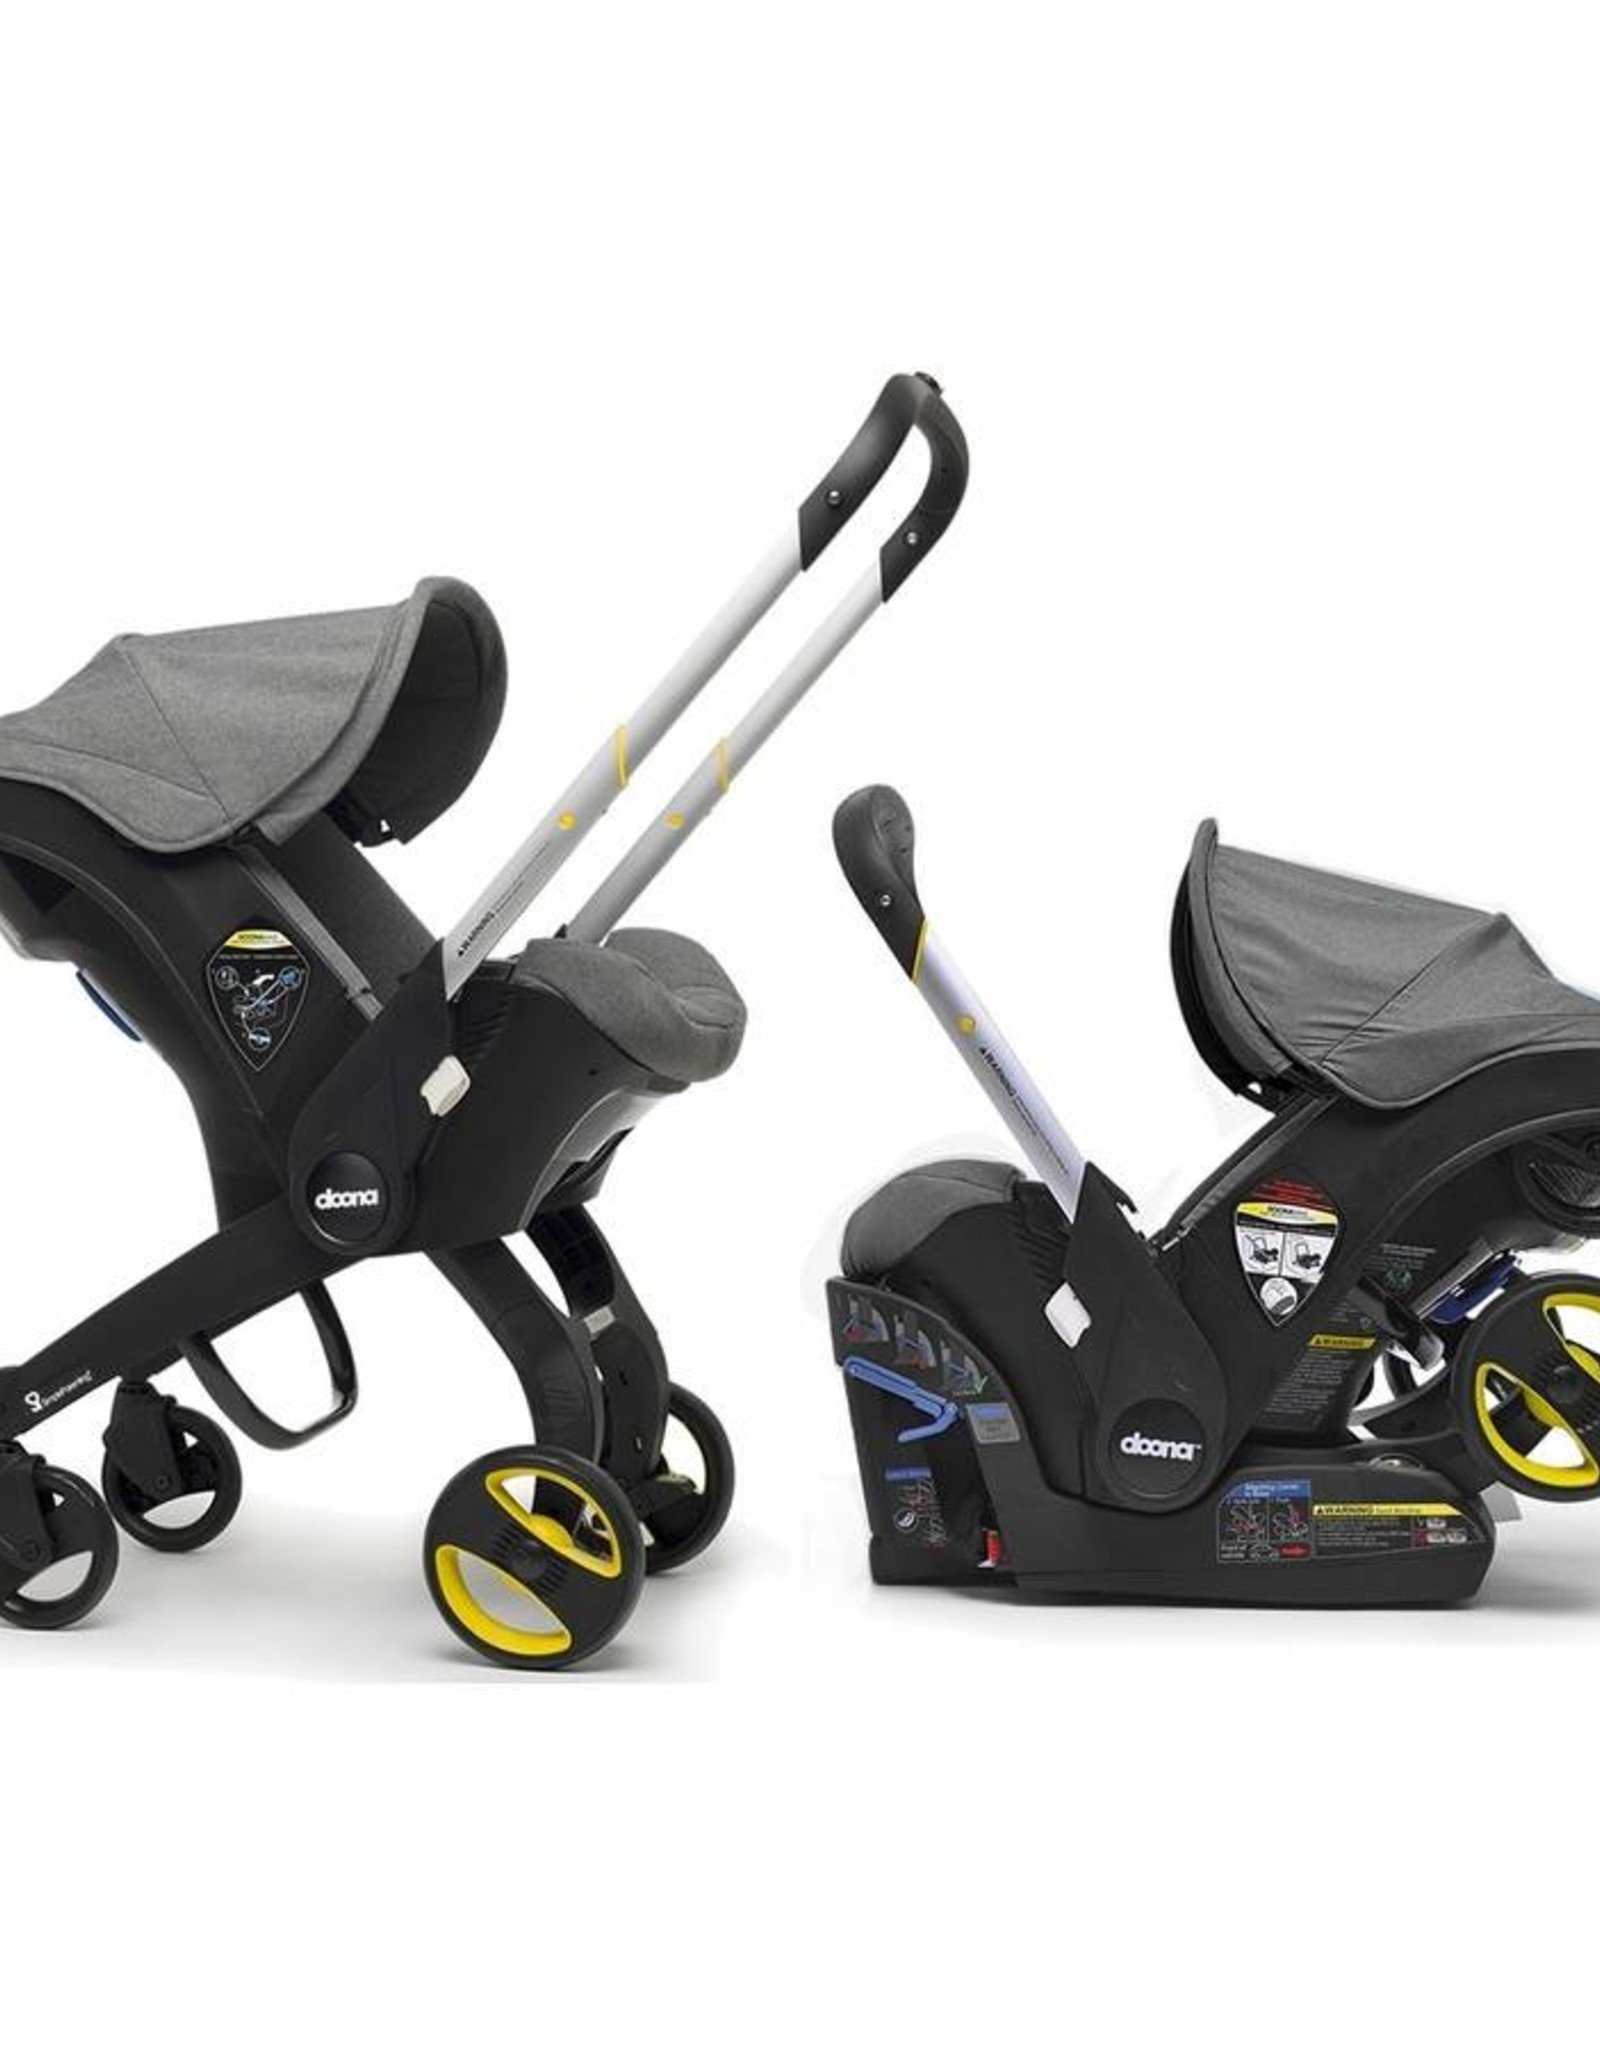 newborn car seat and stroller